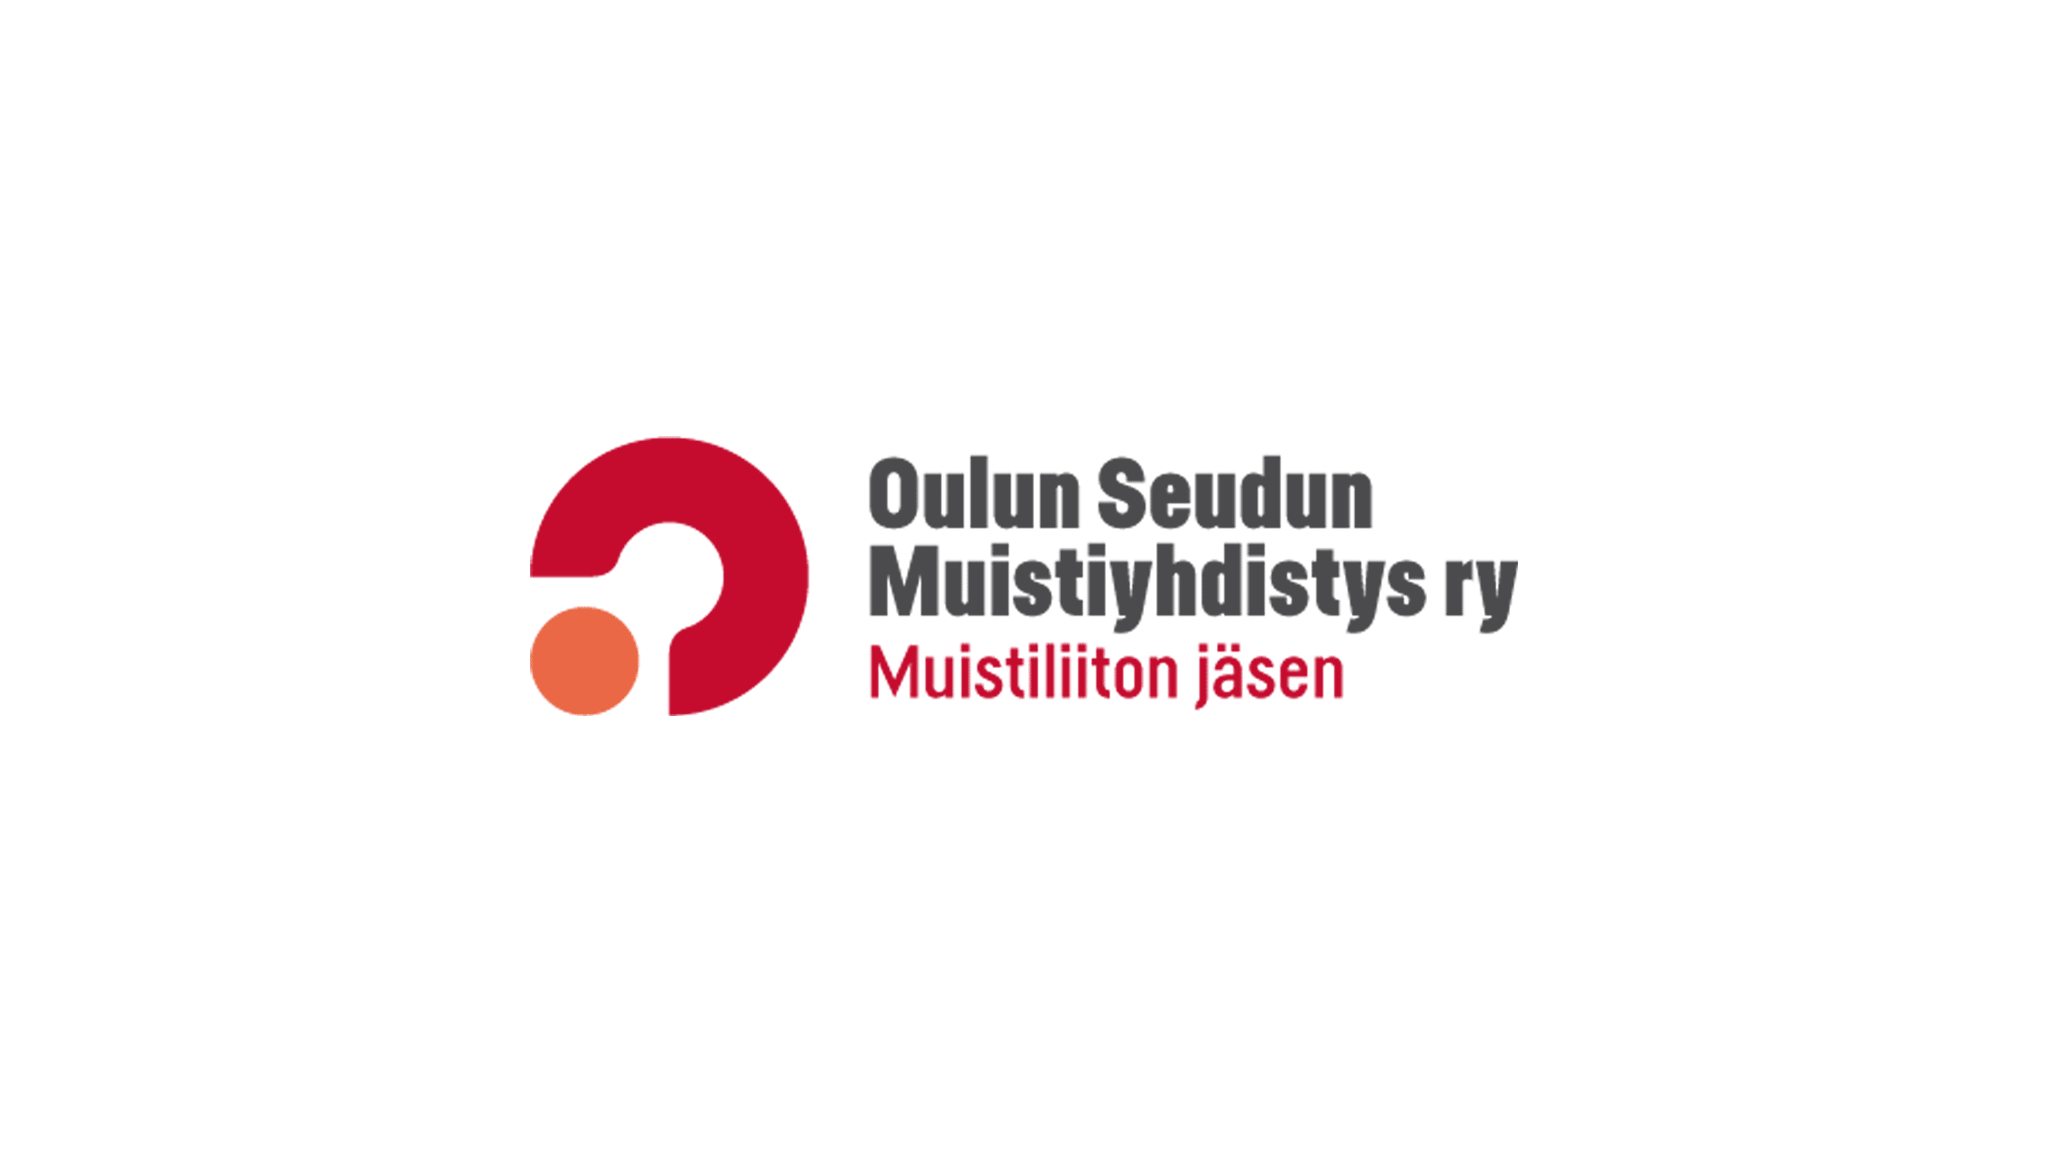 Oulun Seudun Muistiyhdistys